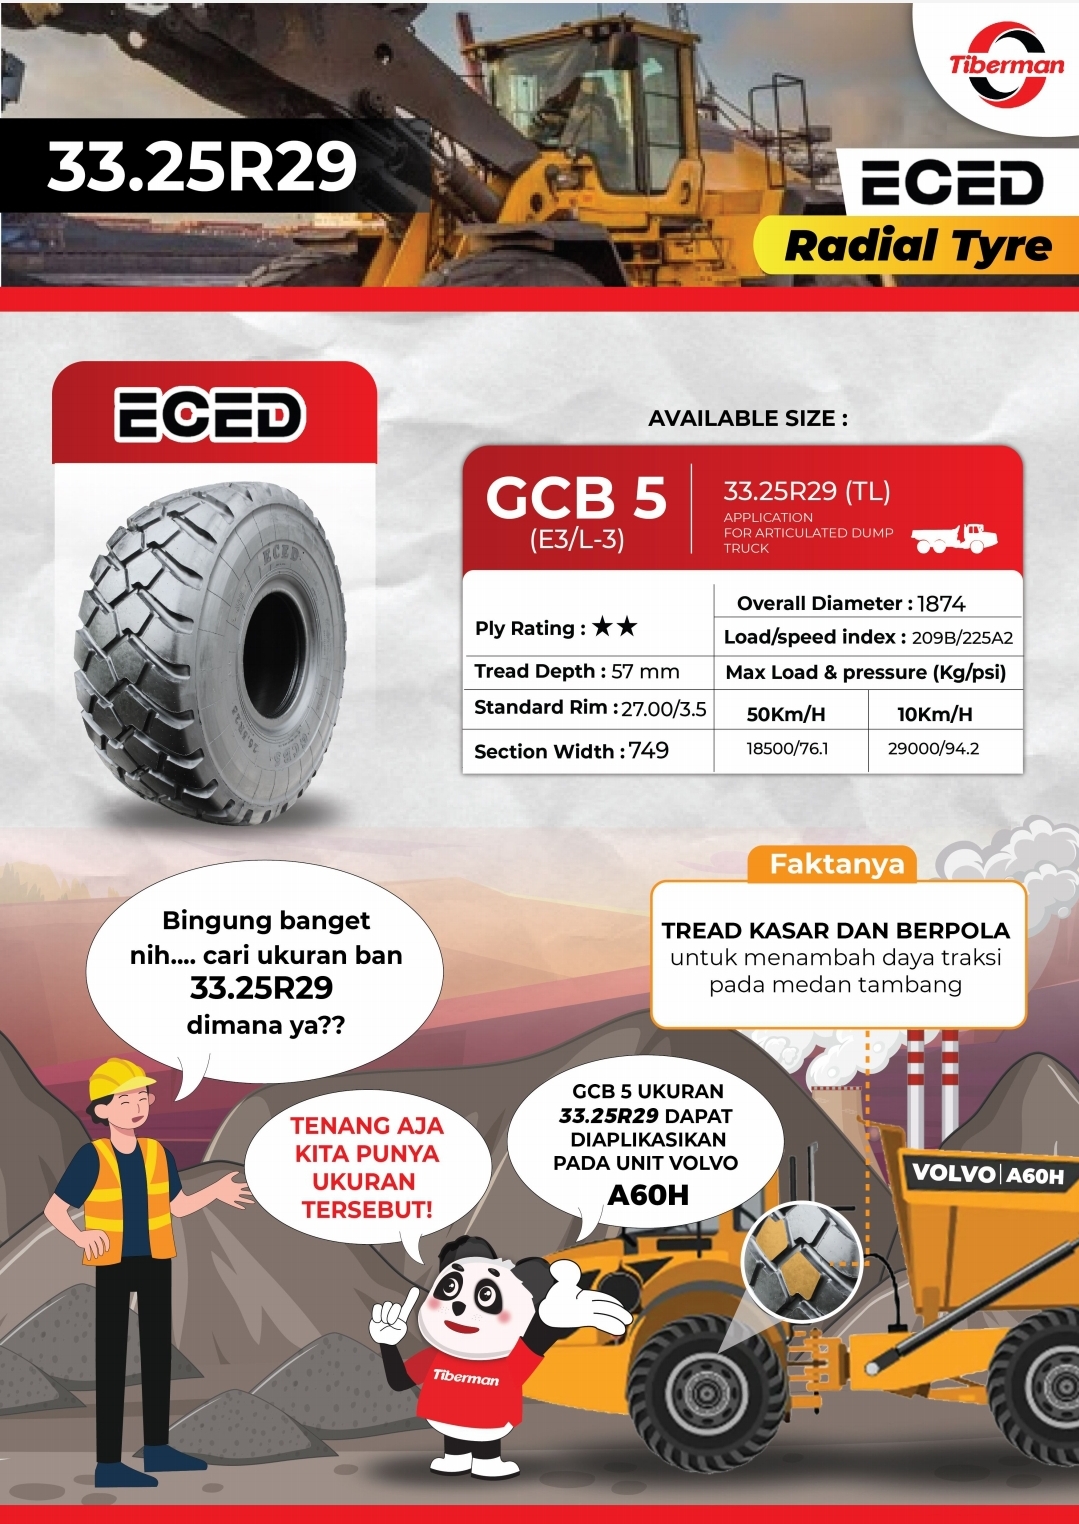 33.25R29 (Radial Tyre)